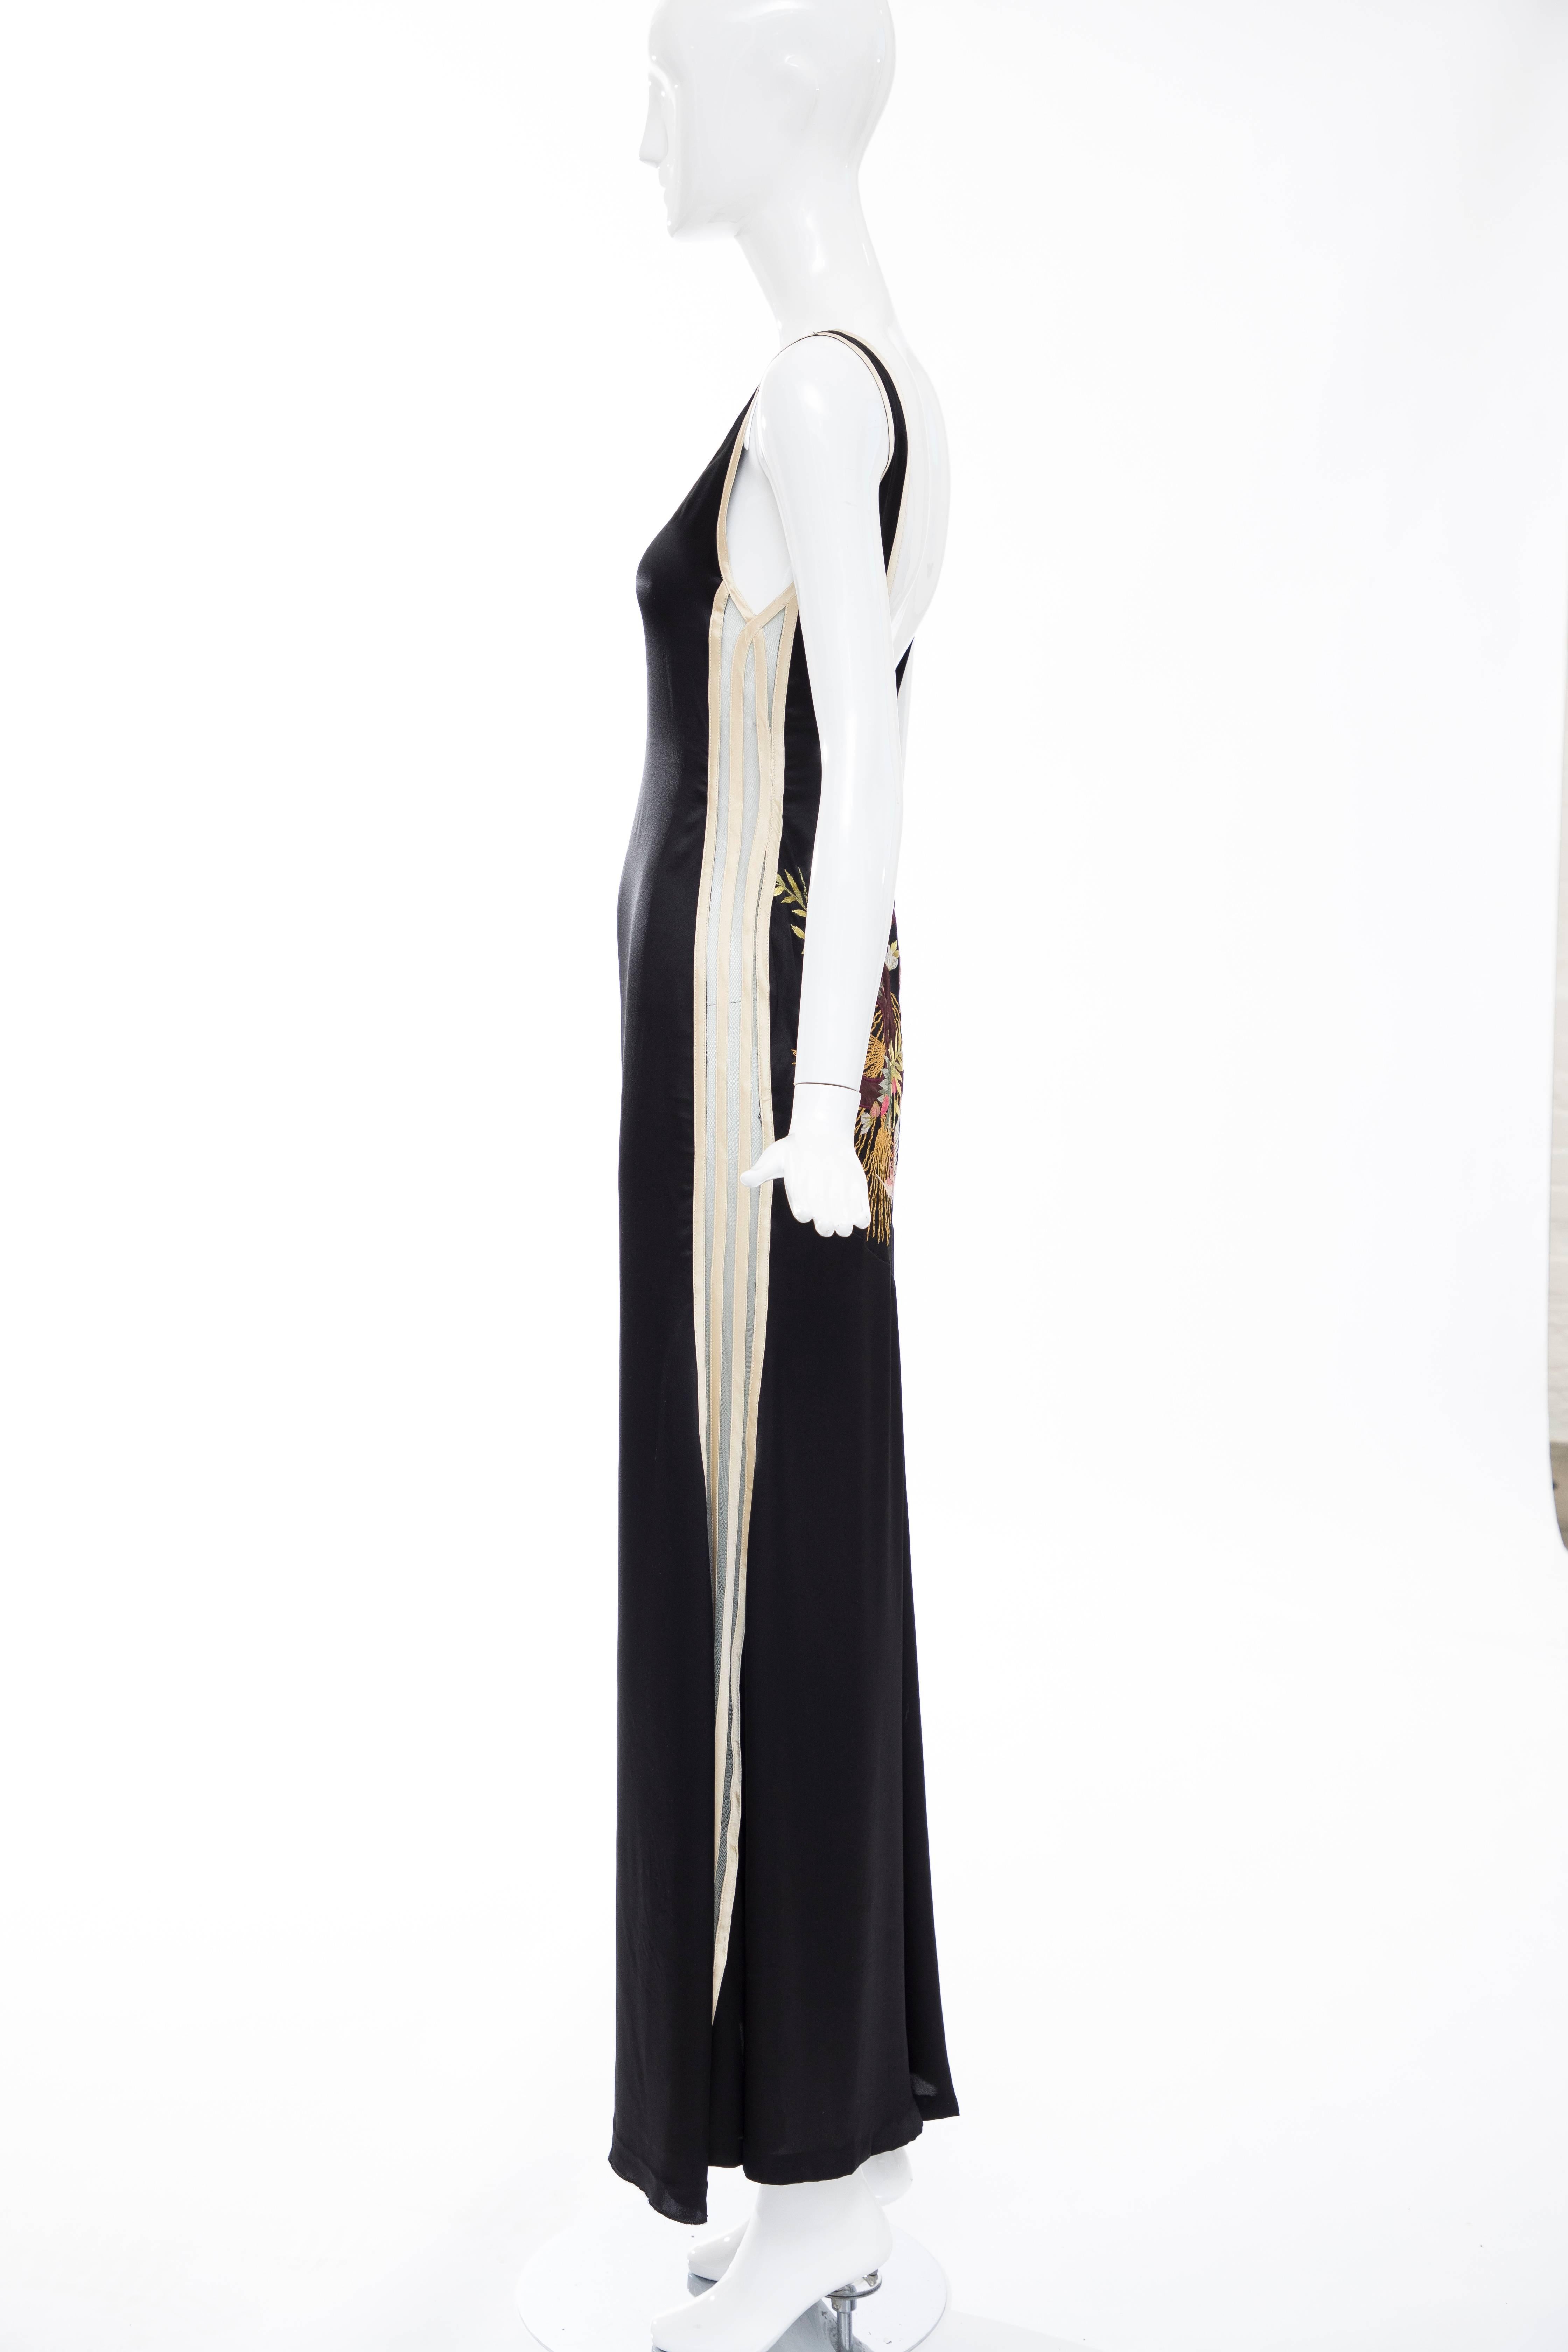 Jean Paul Gaultier Silk Embroidered Evening Dress, Spring 2007 2